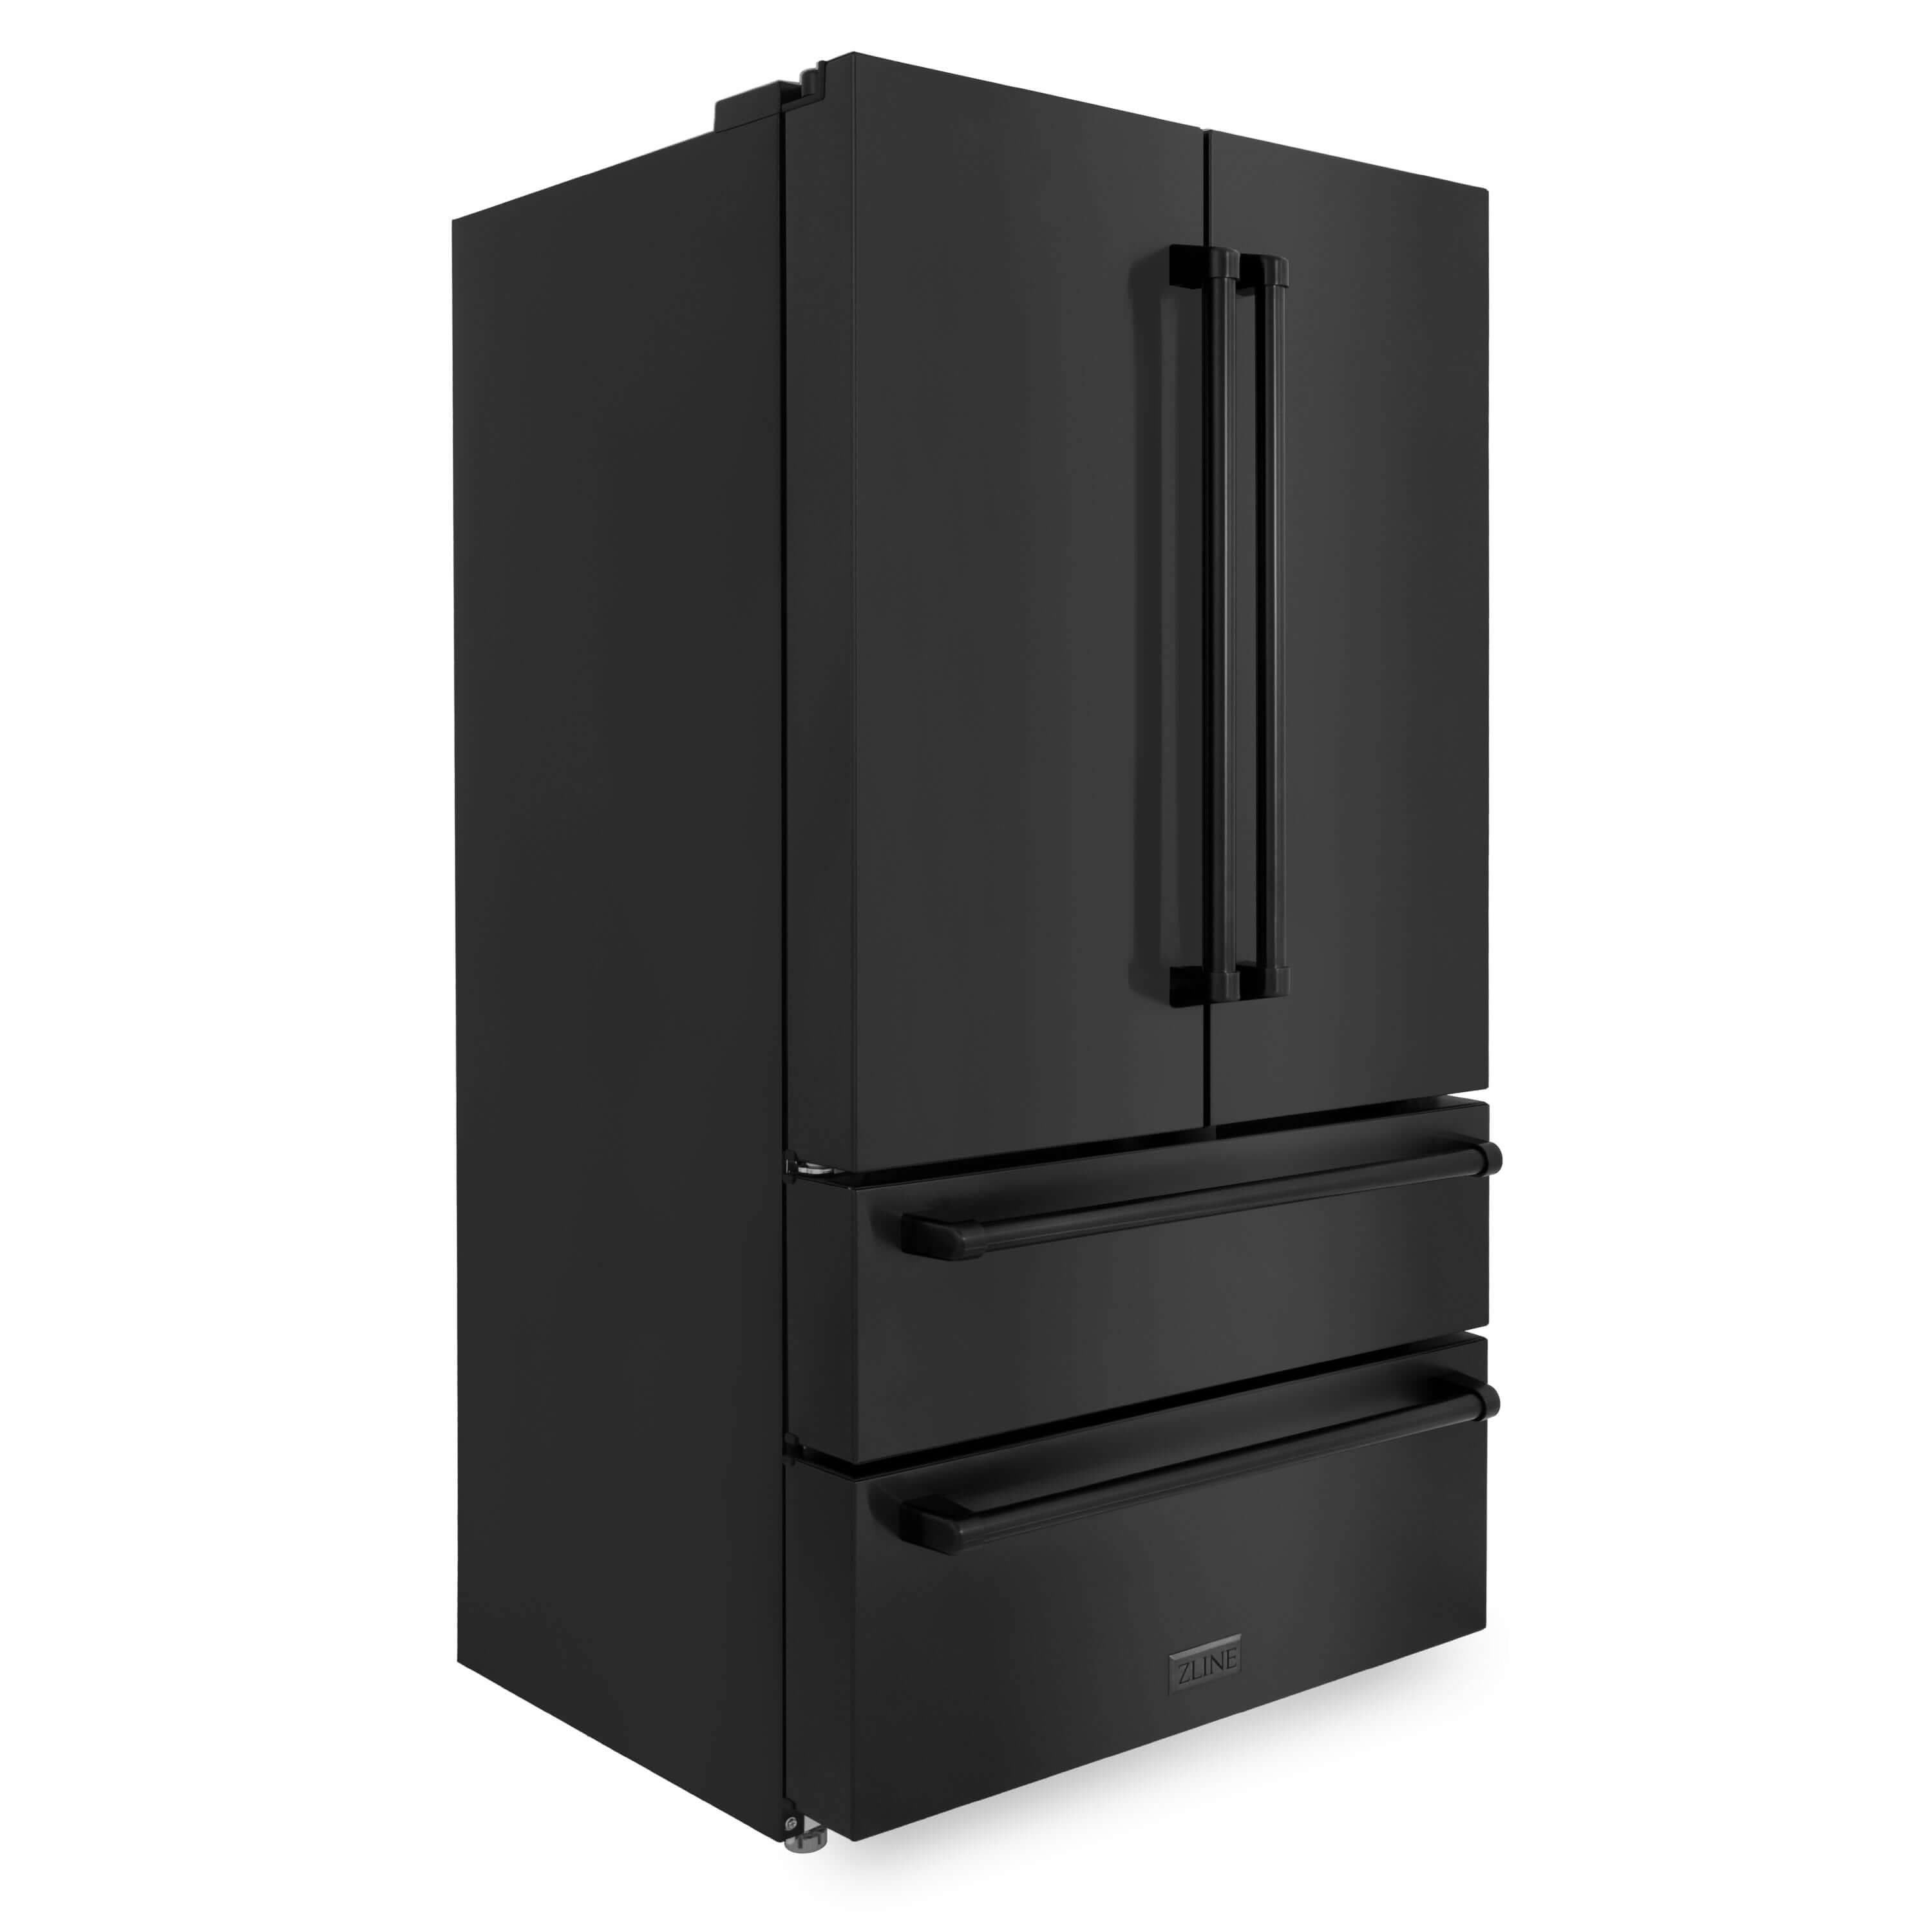 ZLINE 36 in. Freestanding French Door Refrigerator with Ice Maker in Black Stainless Steel (RFM-36-BS)